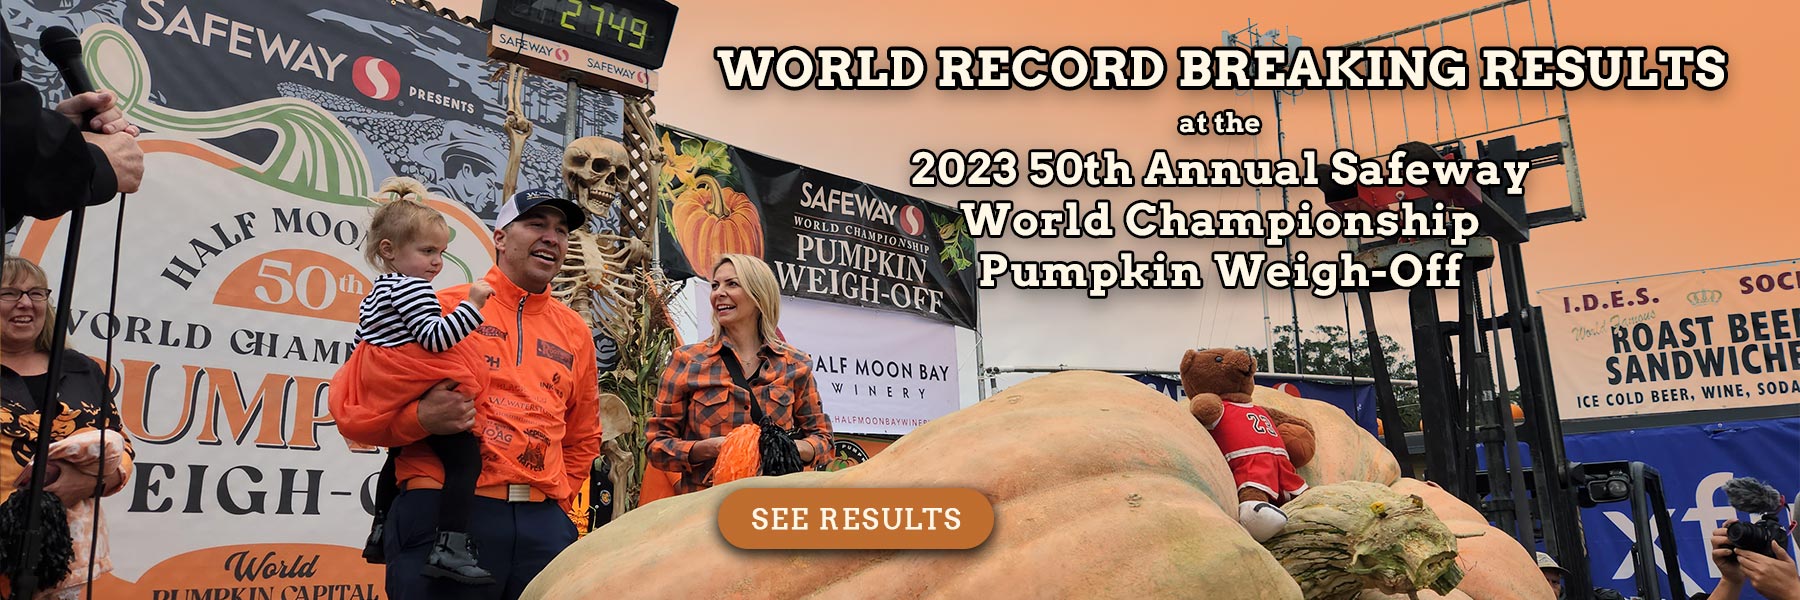 2023 Safeway World Championship Pumpkin Weigh-Off Results - click for details